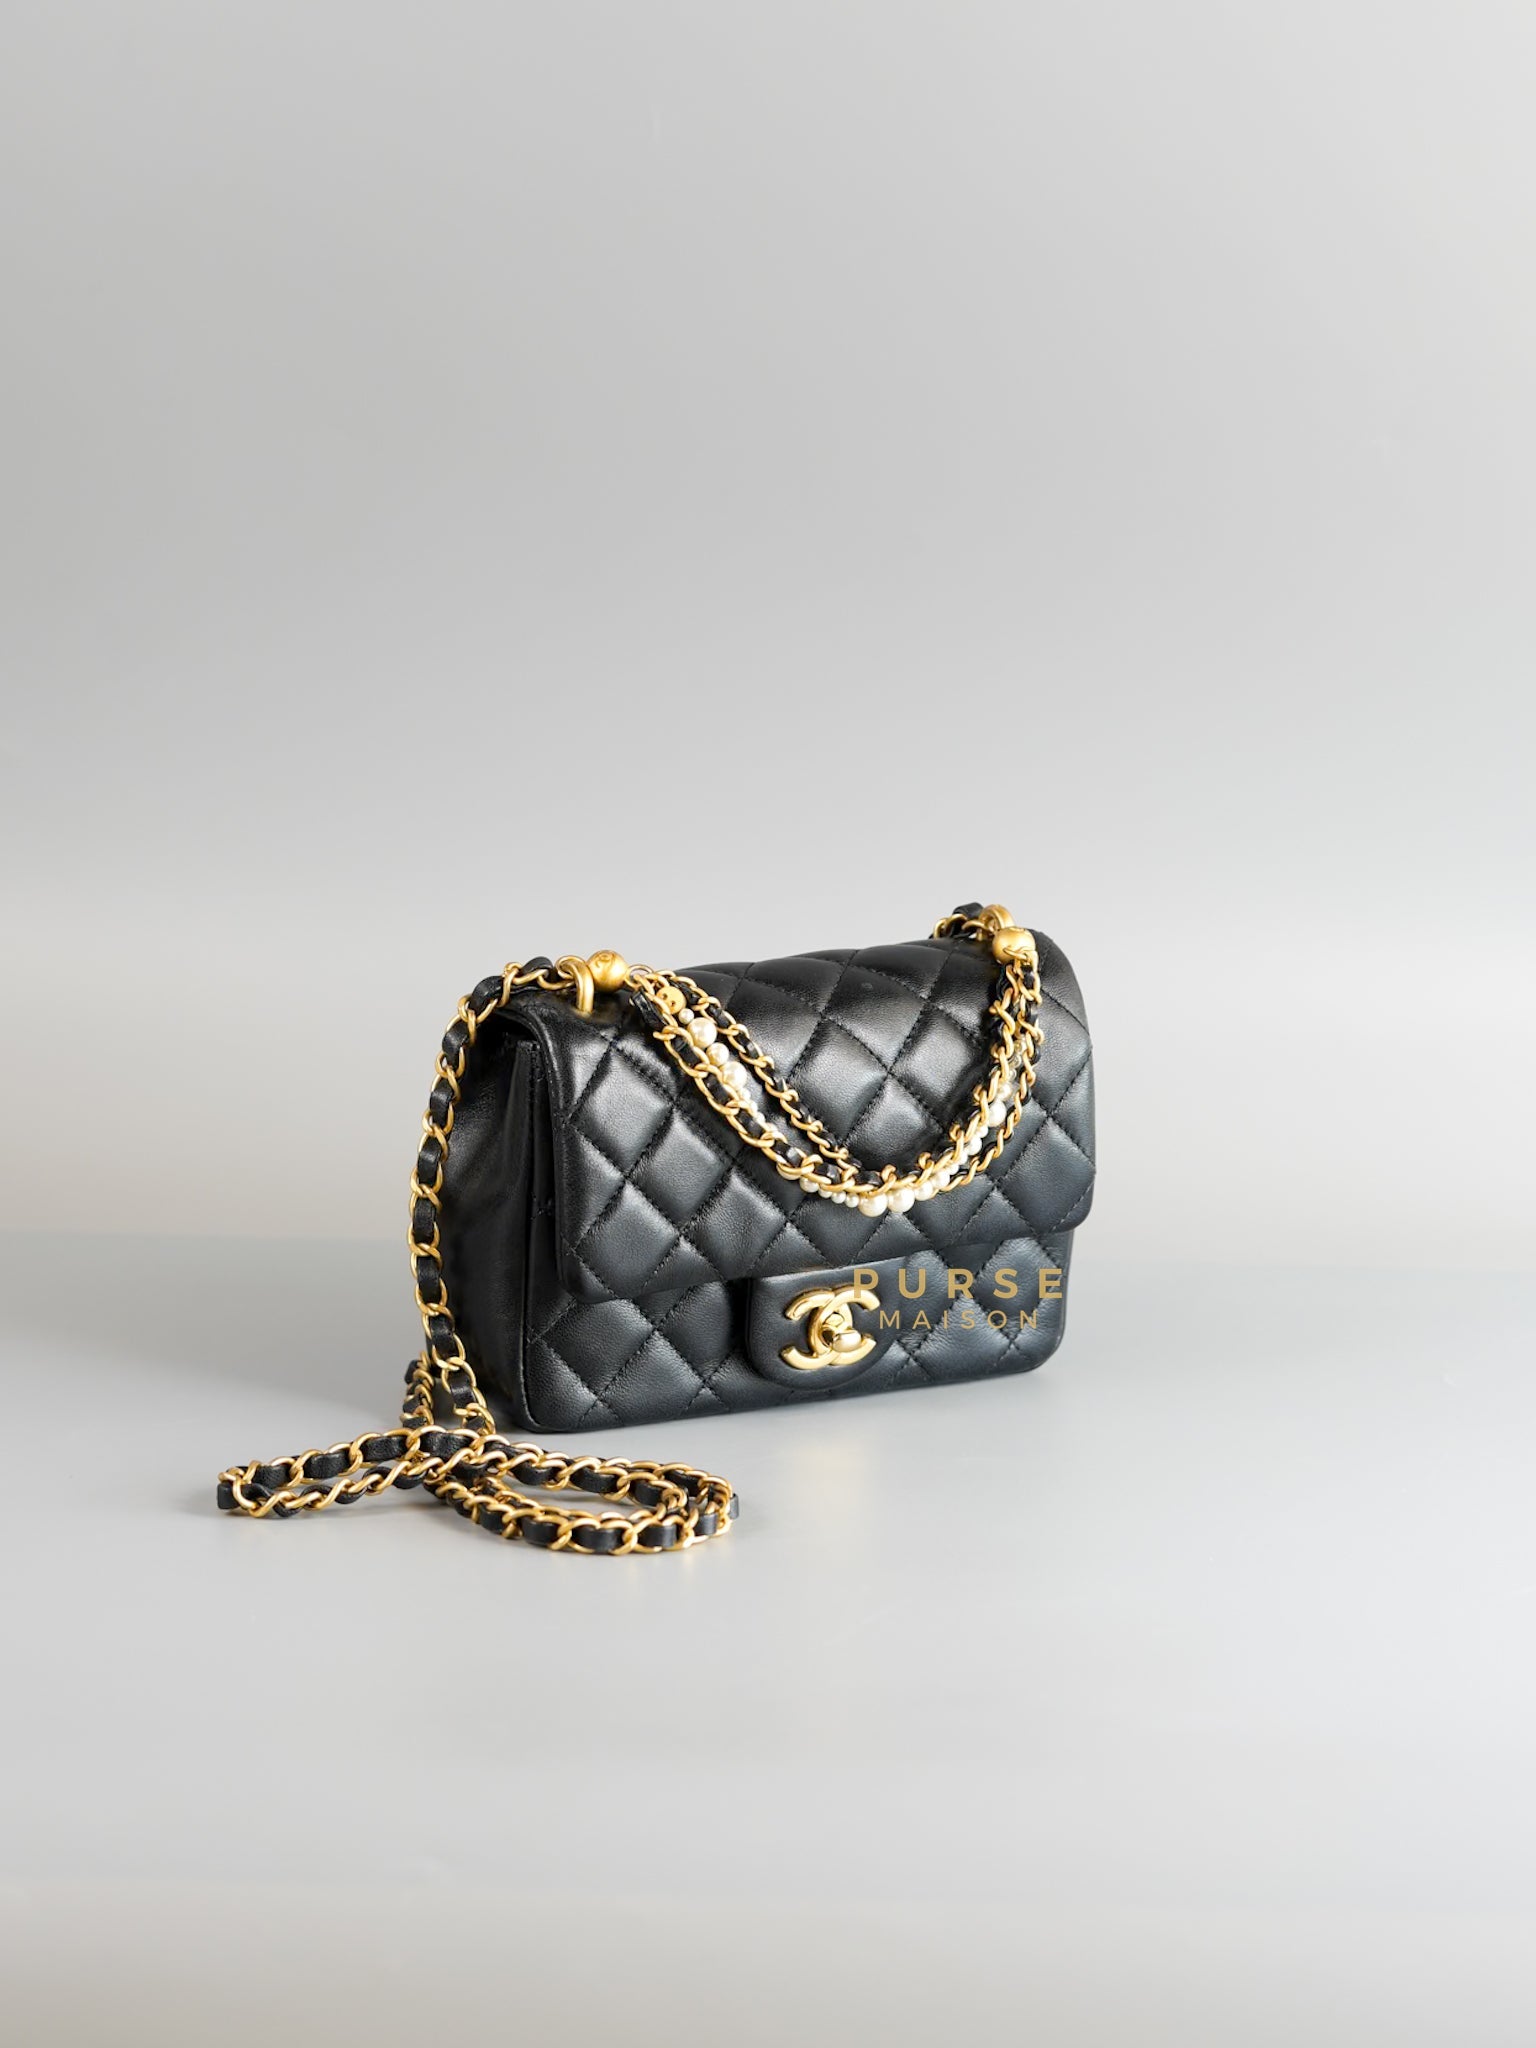 24P Mini Square Pearl Chain in Black Lambskin & Aged Gold Hardware (Microchip) | Purse Maison Luxury Bags Shop